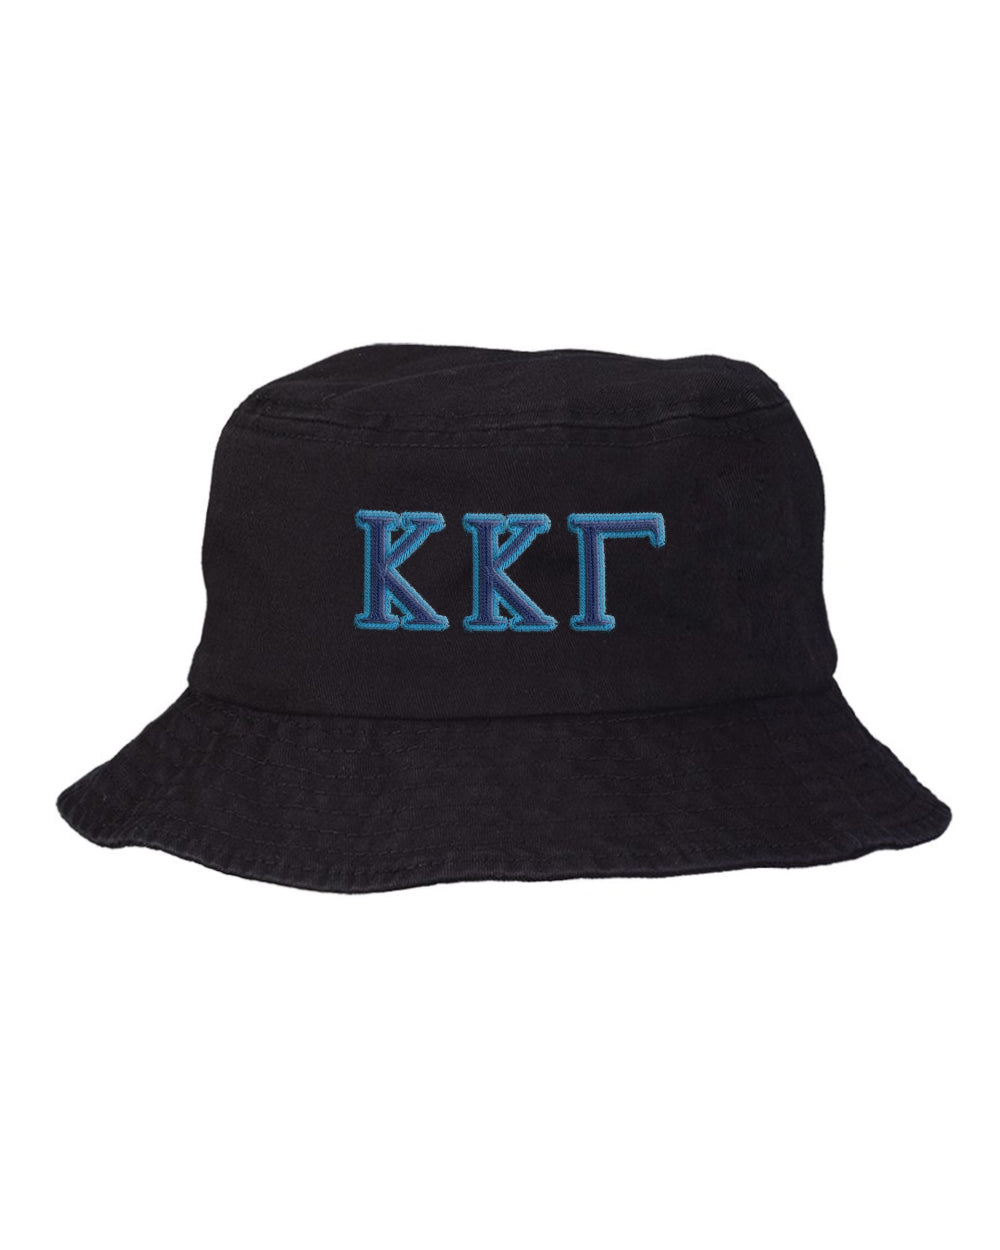 Kappa Kappa Gamma Embroidered Bucket Hat